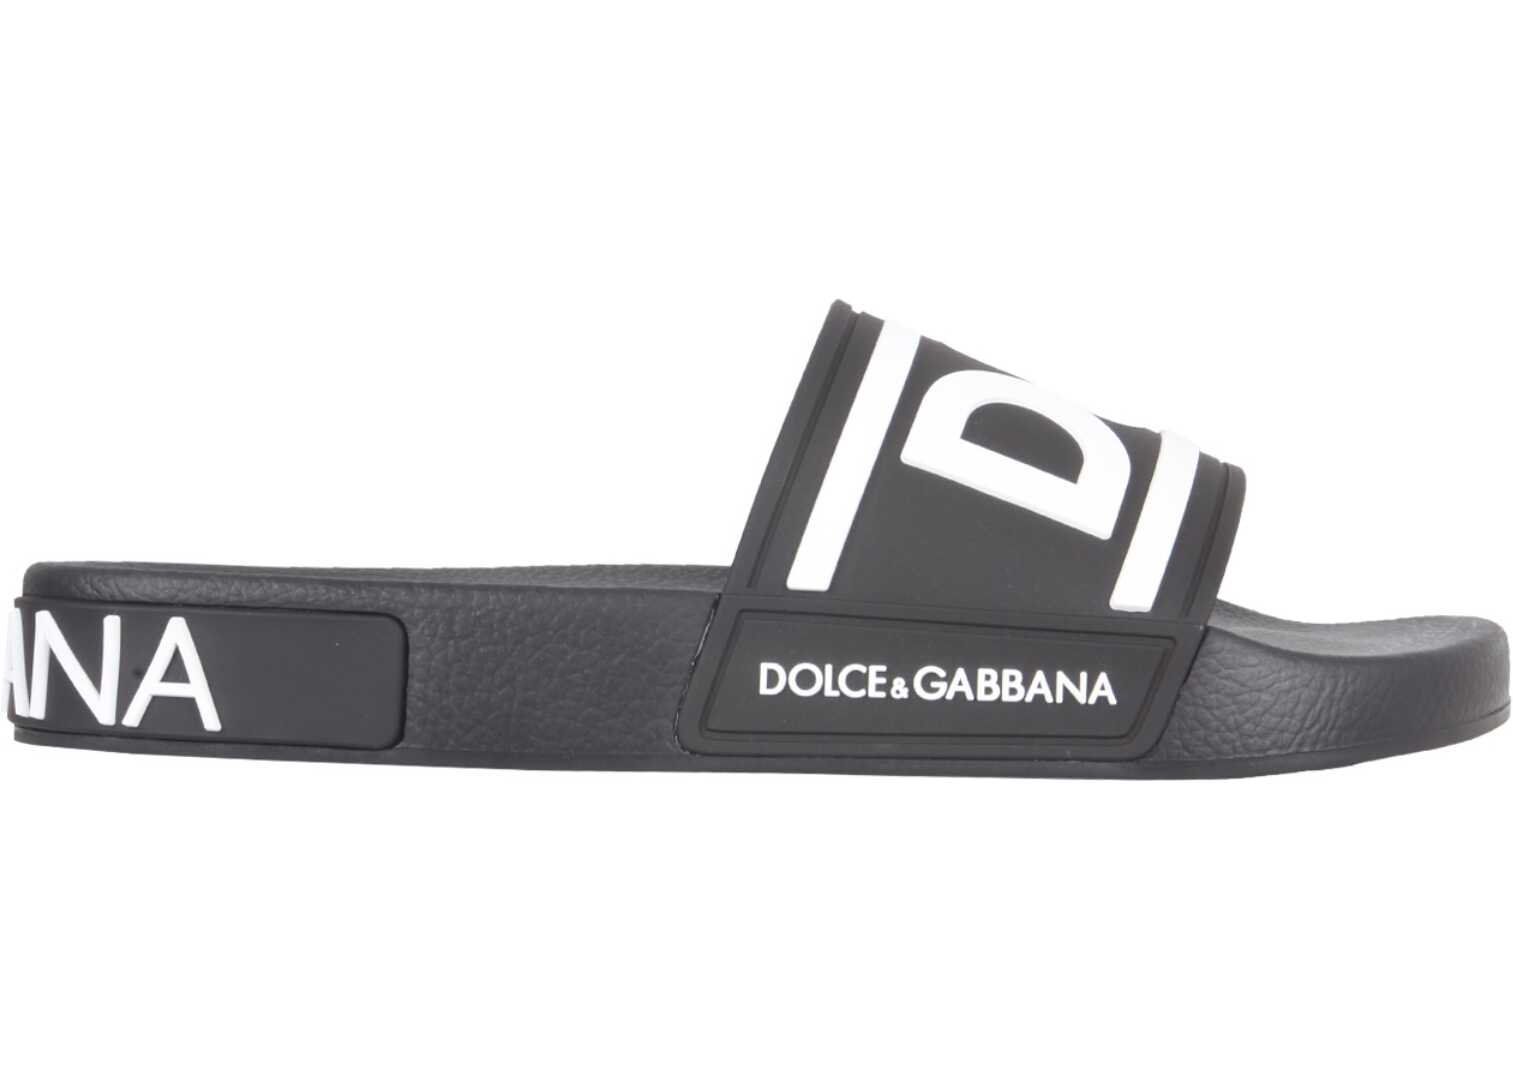 Dolce & Gabbana Slide Sandals CW1991_AQ85889690 BLACK image0